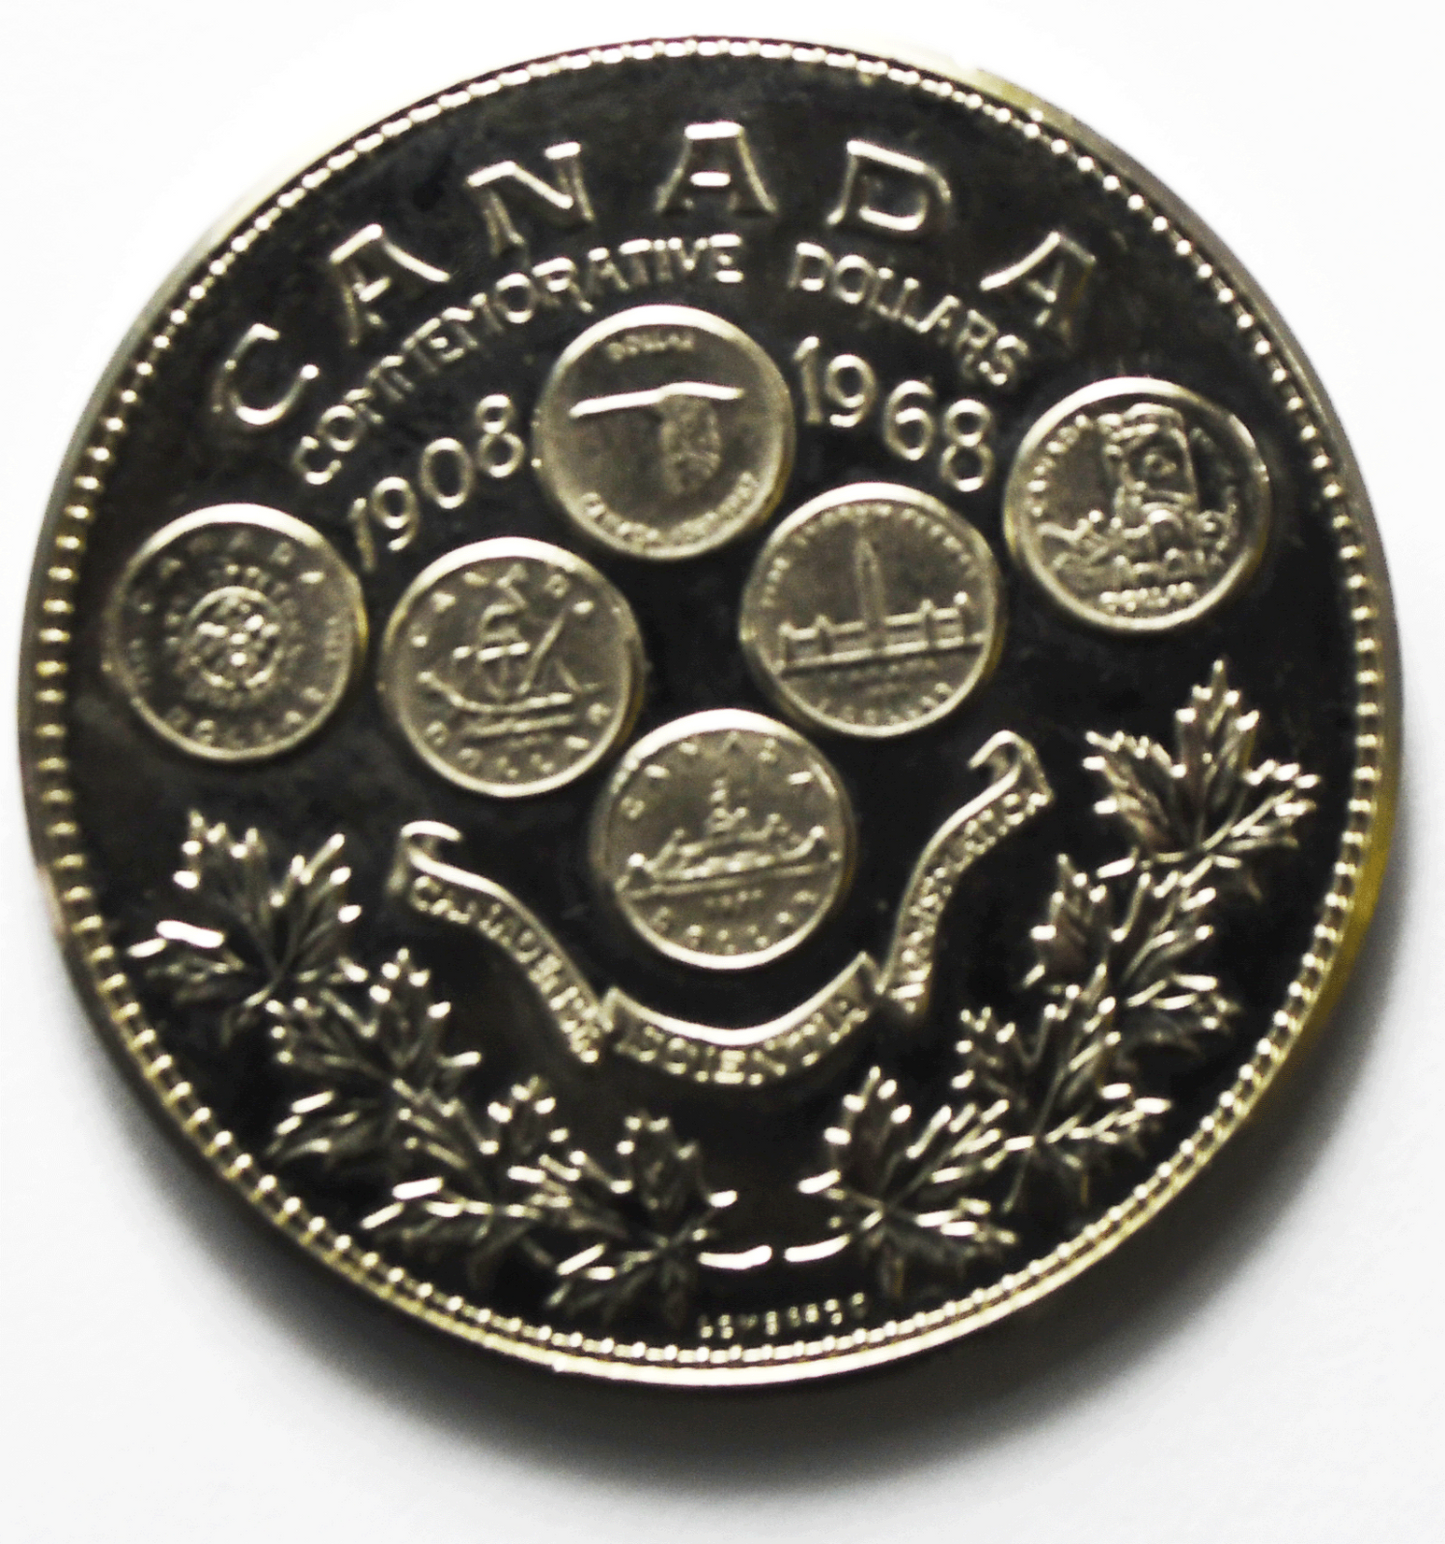 1968 Canada Proof Commemorative 60 Years Numismatic Dollar 38mm